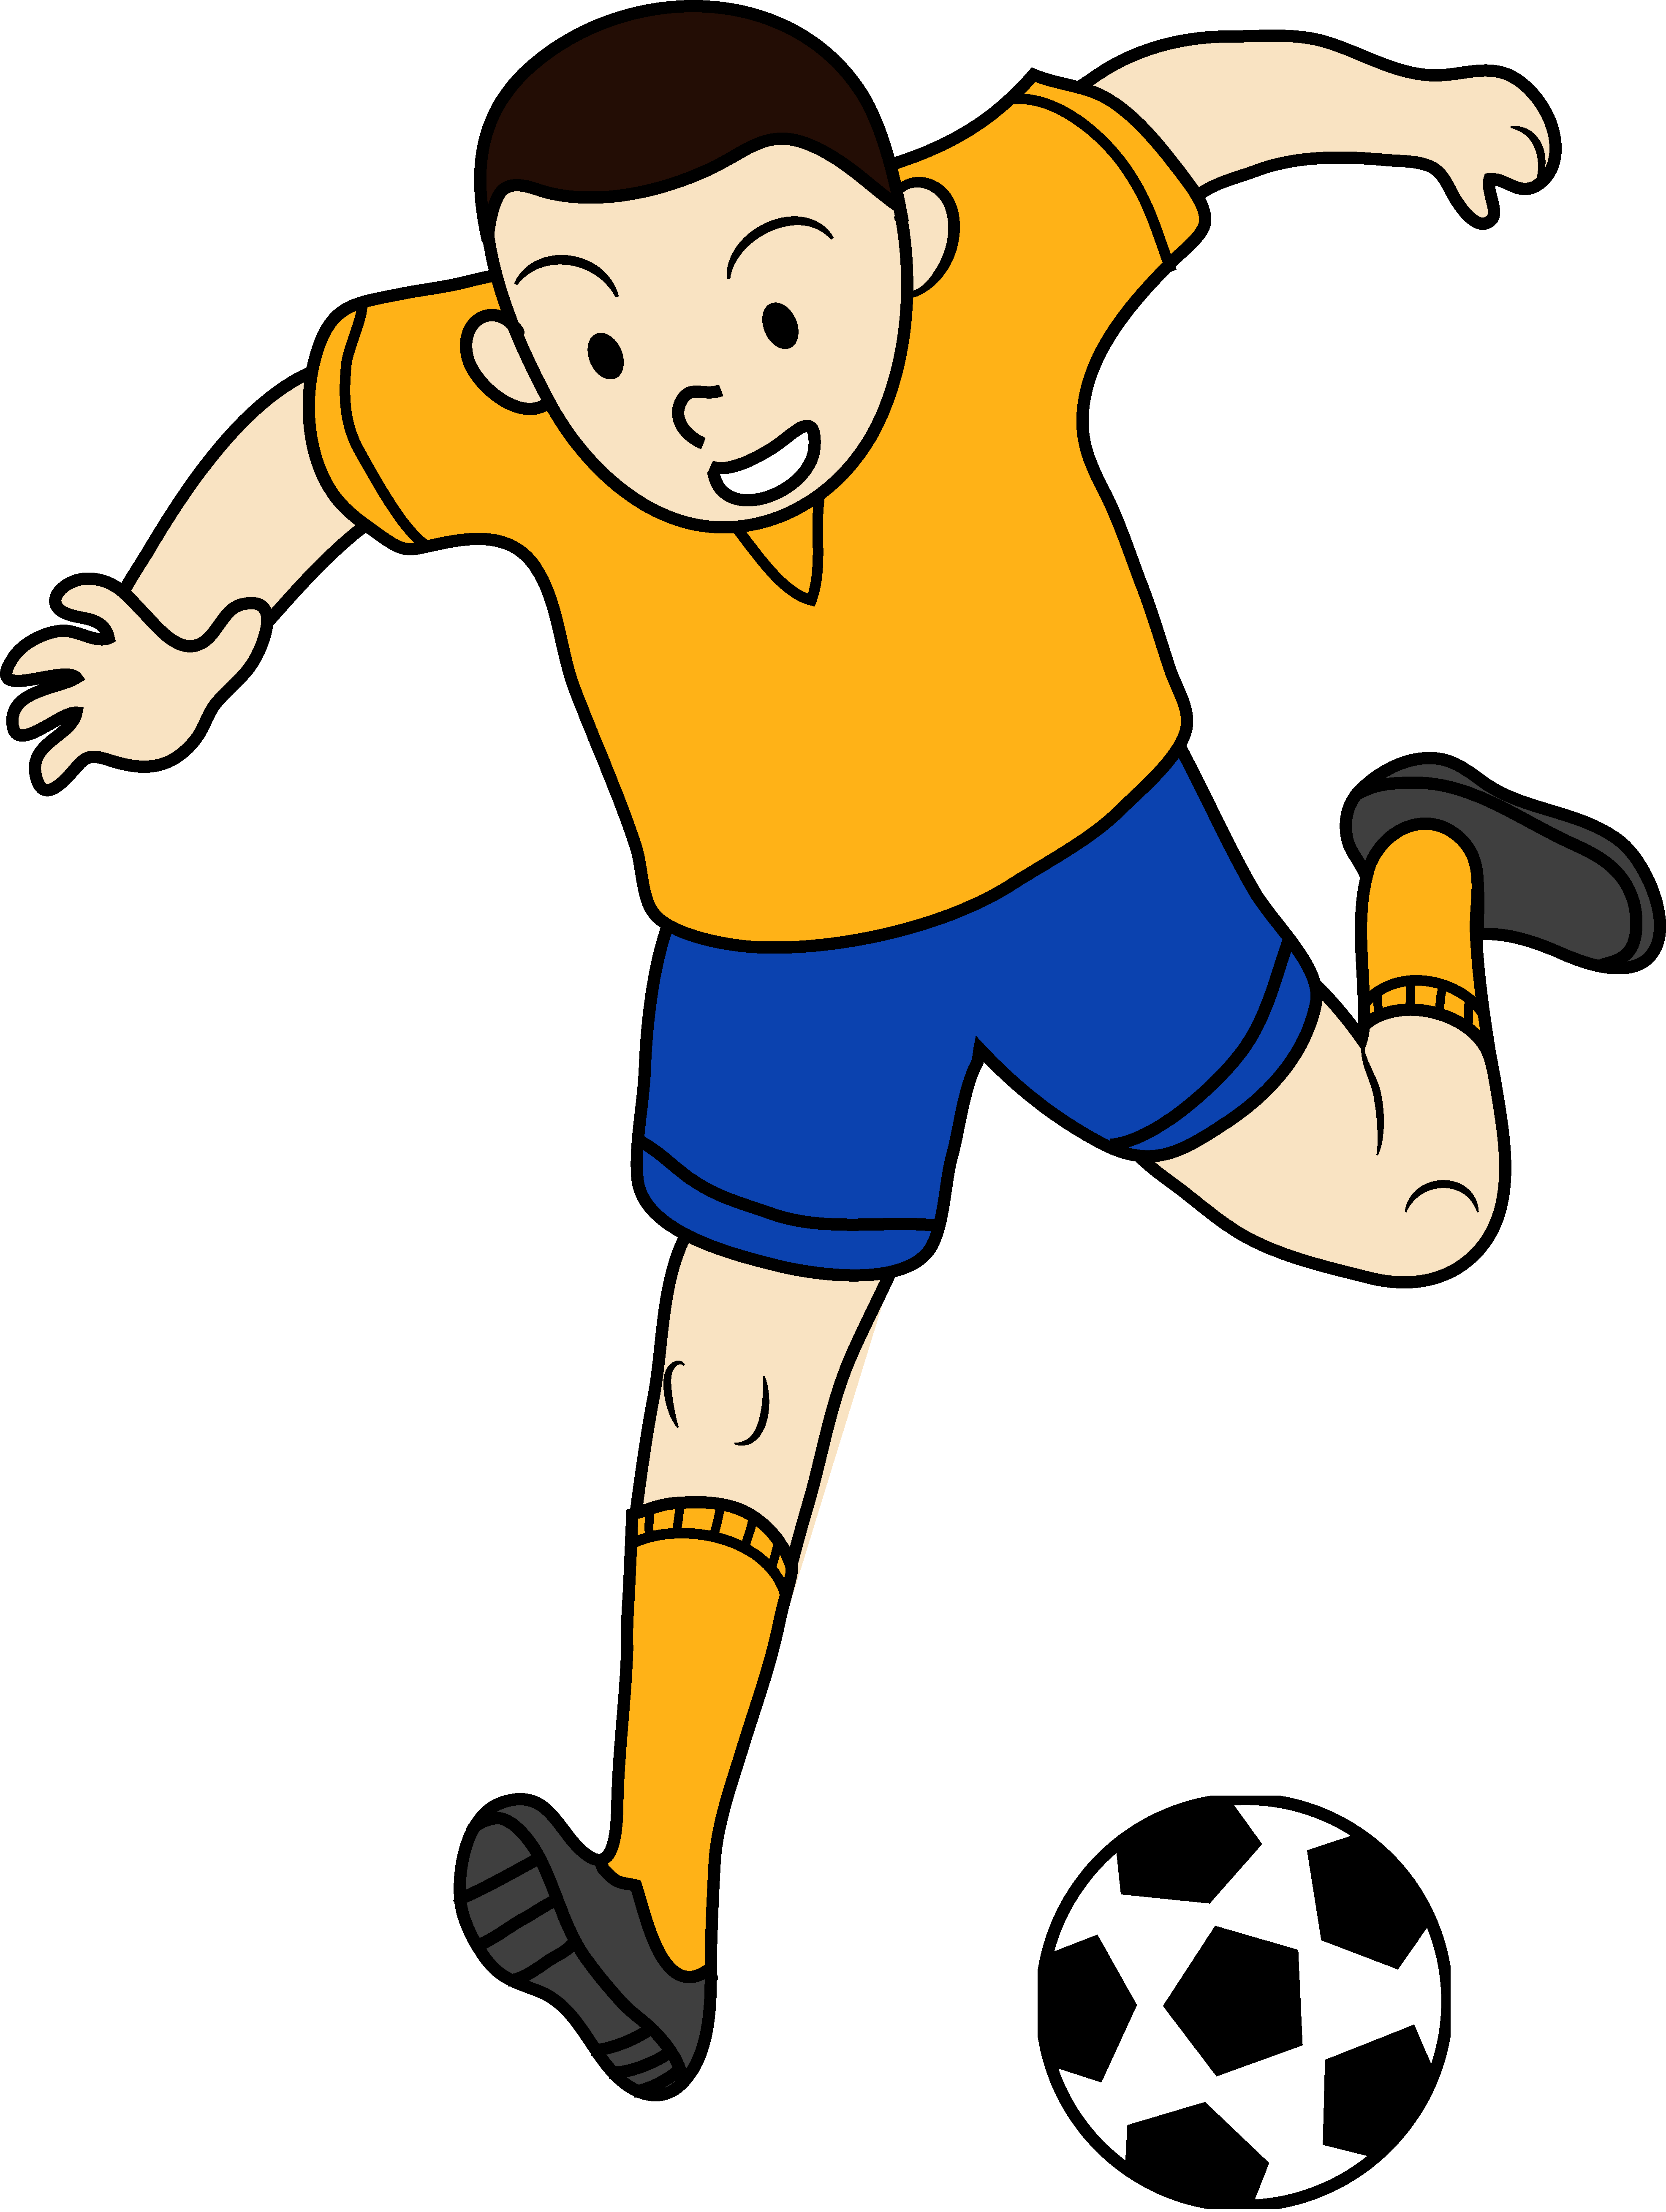 Kid Football Player Clipart.